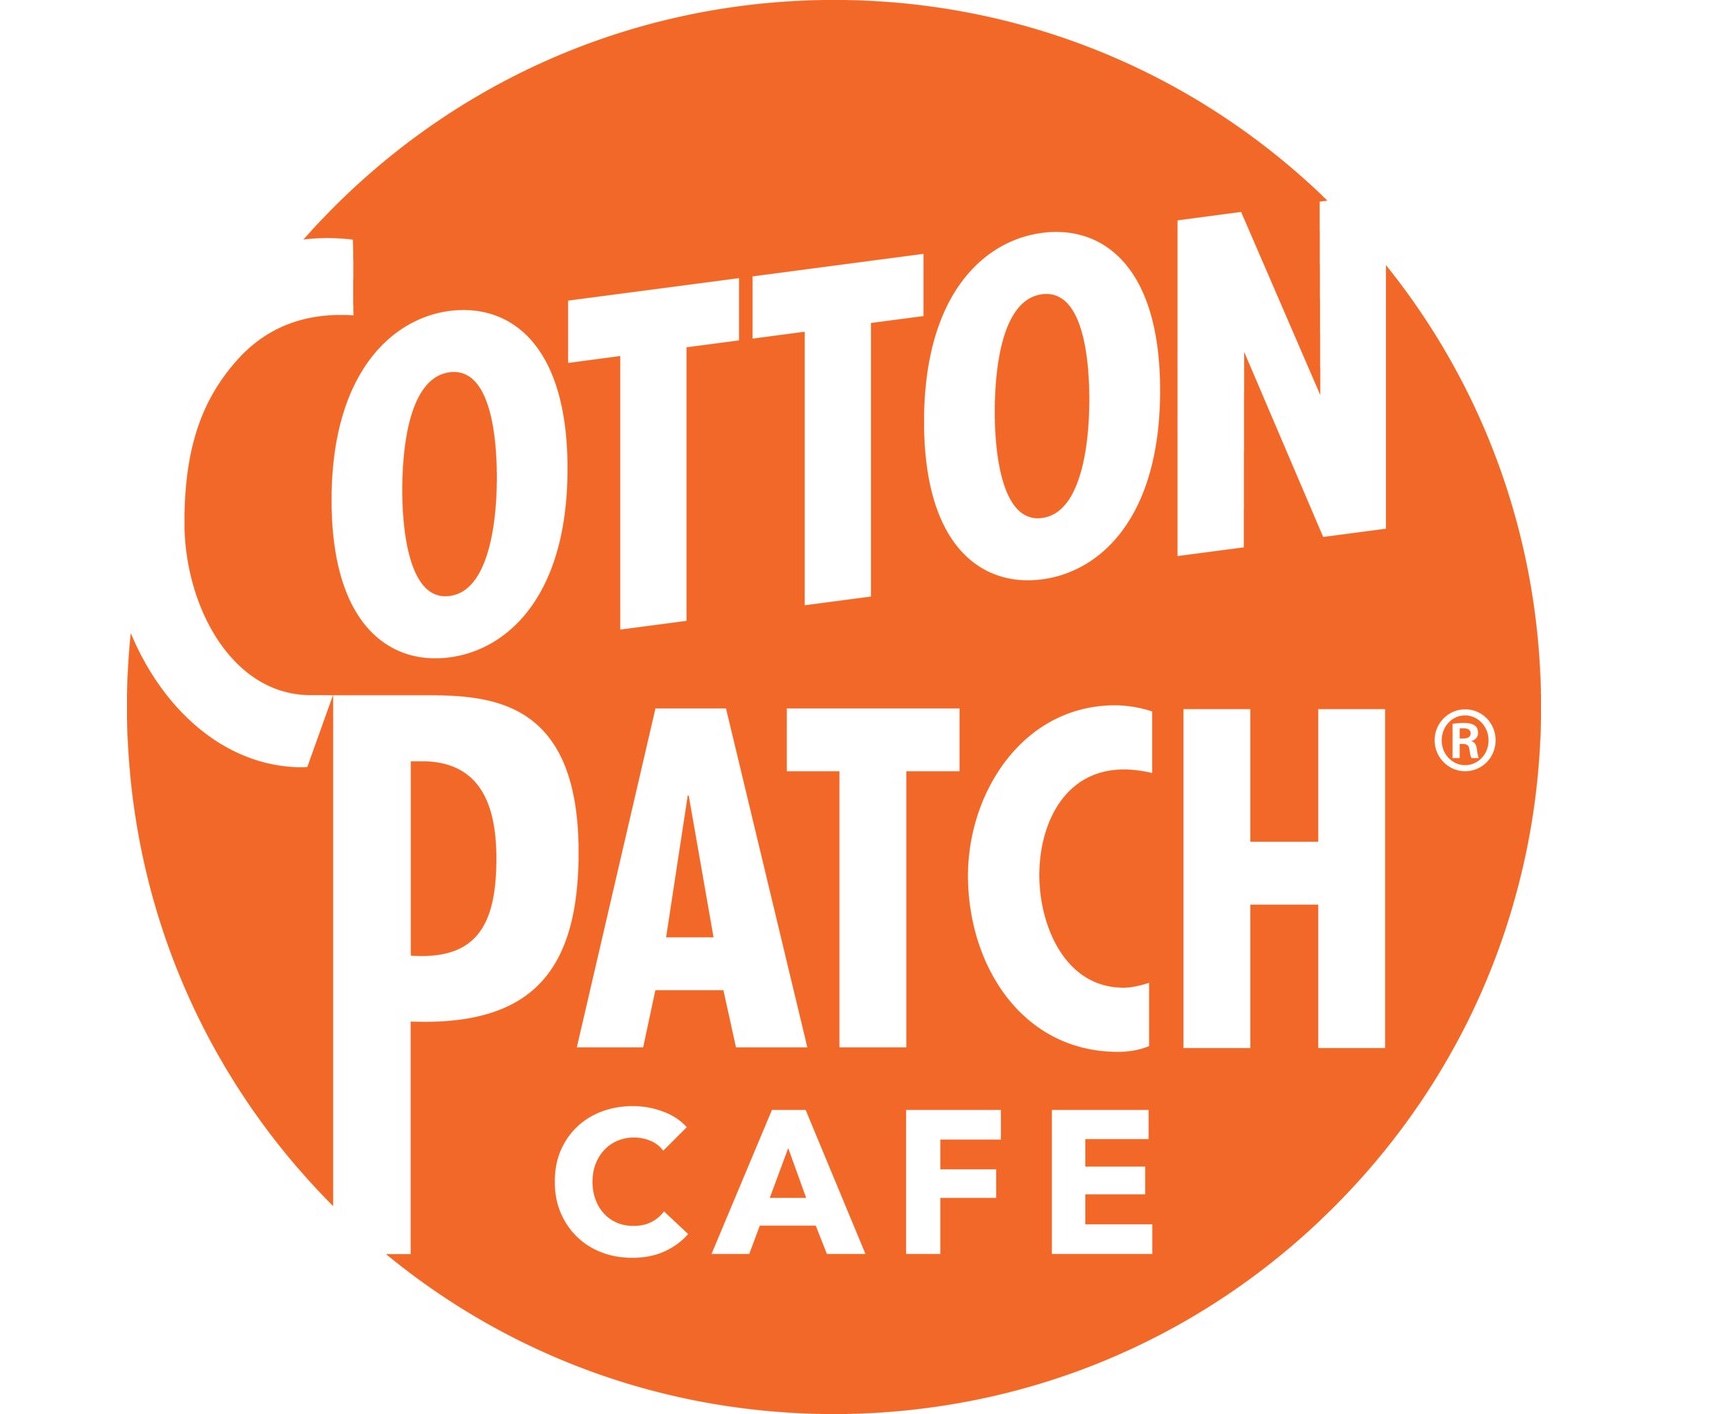 Cotton Patch Cafe Logo